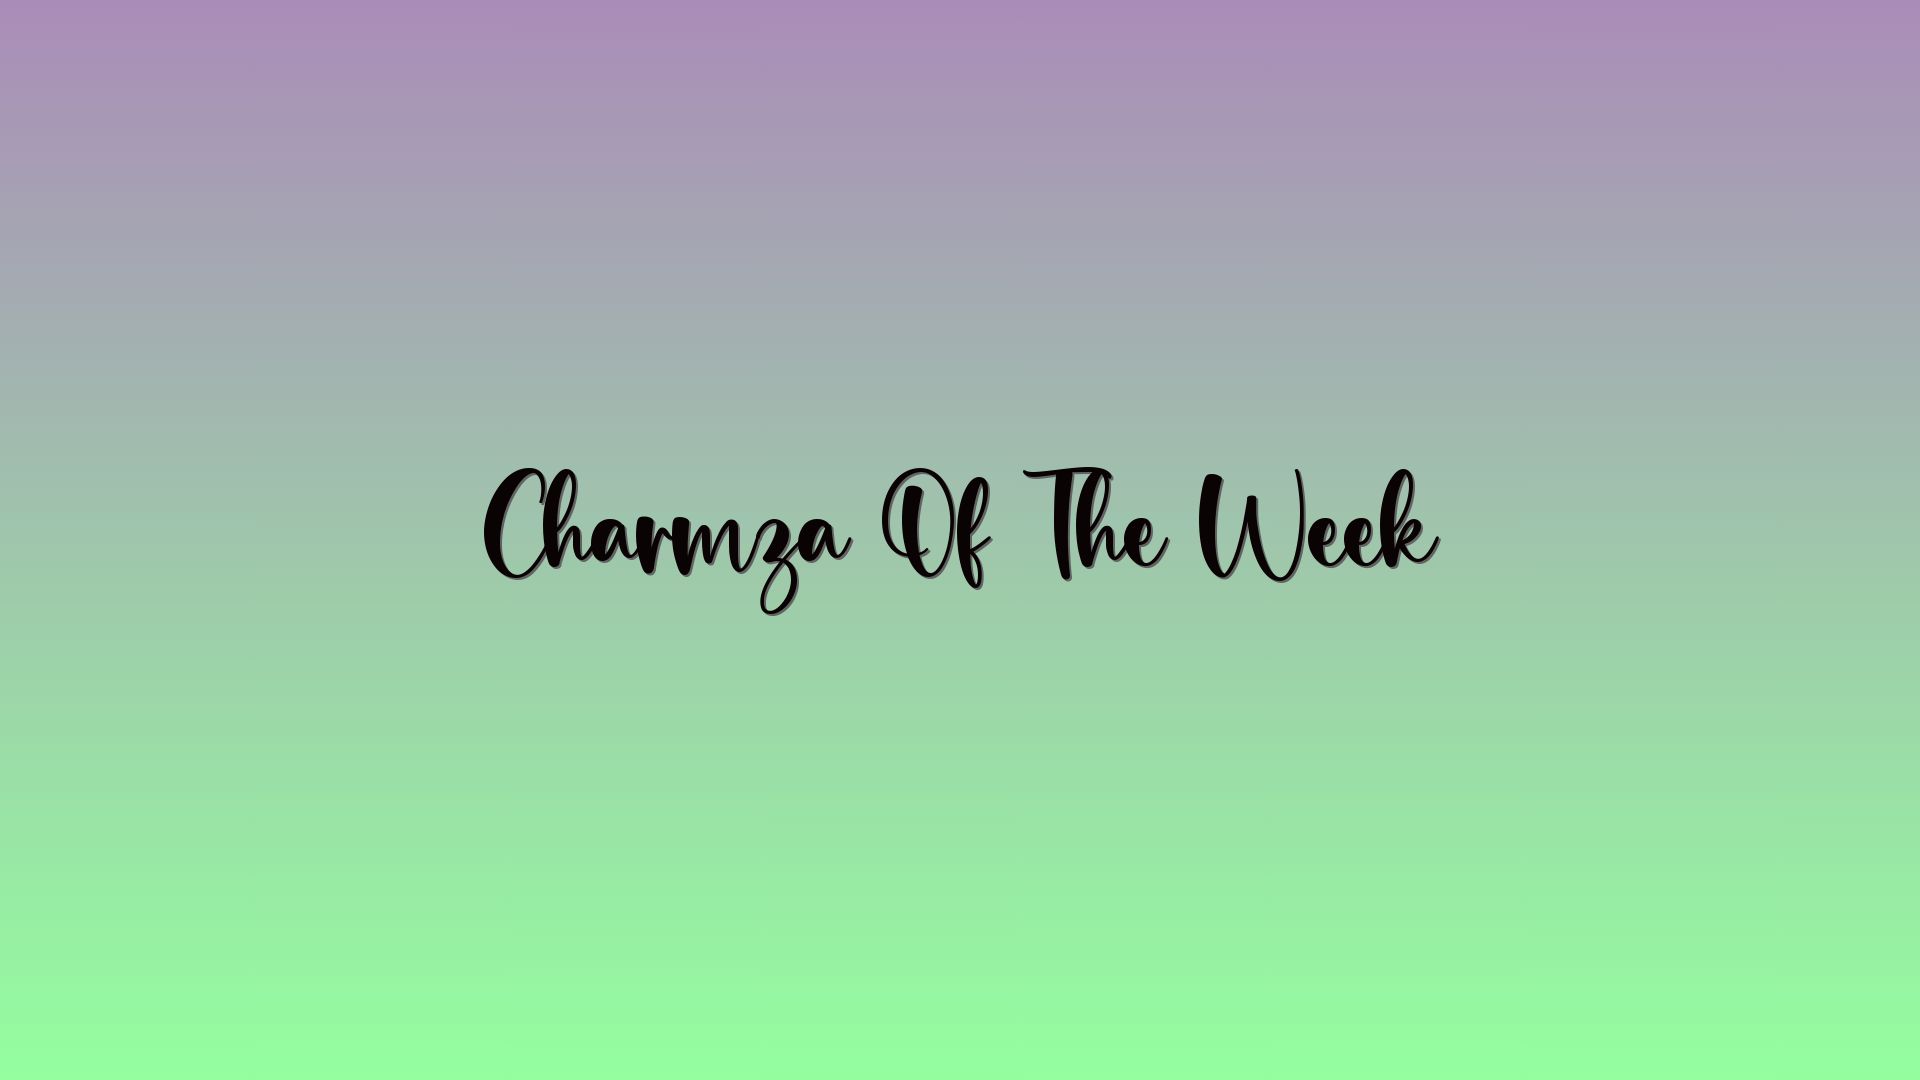 Charmza Of The Week